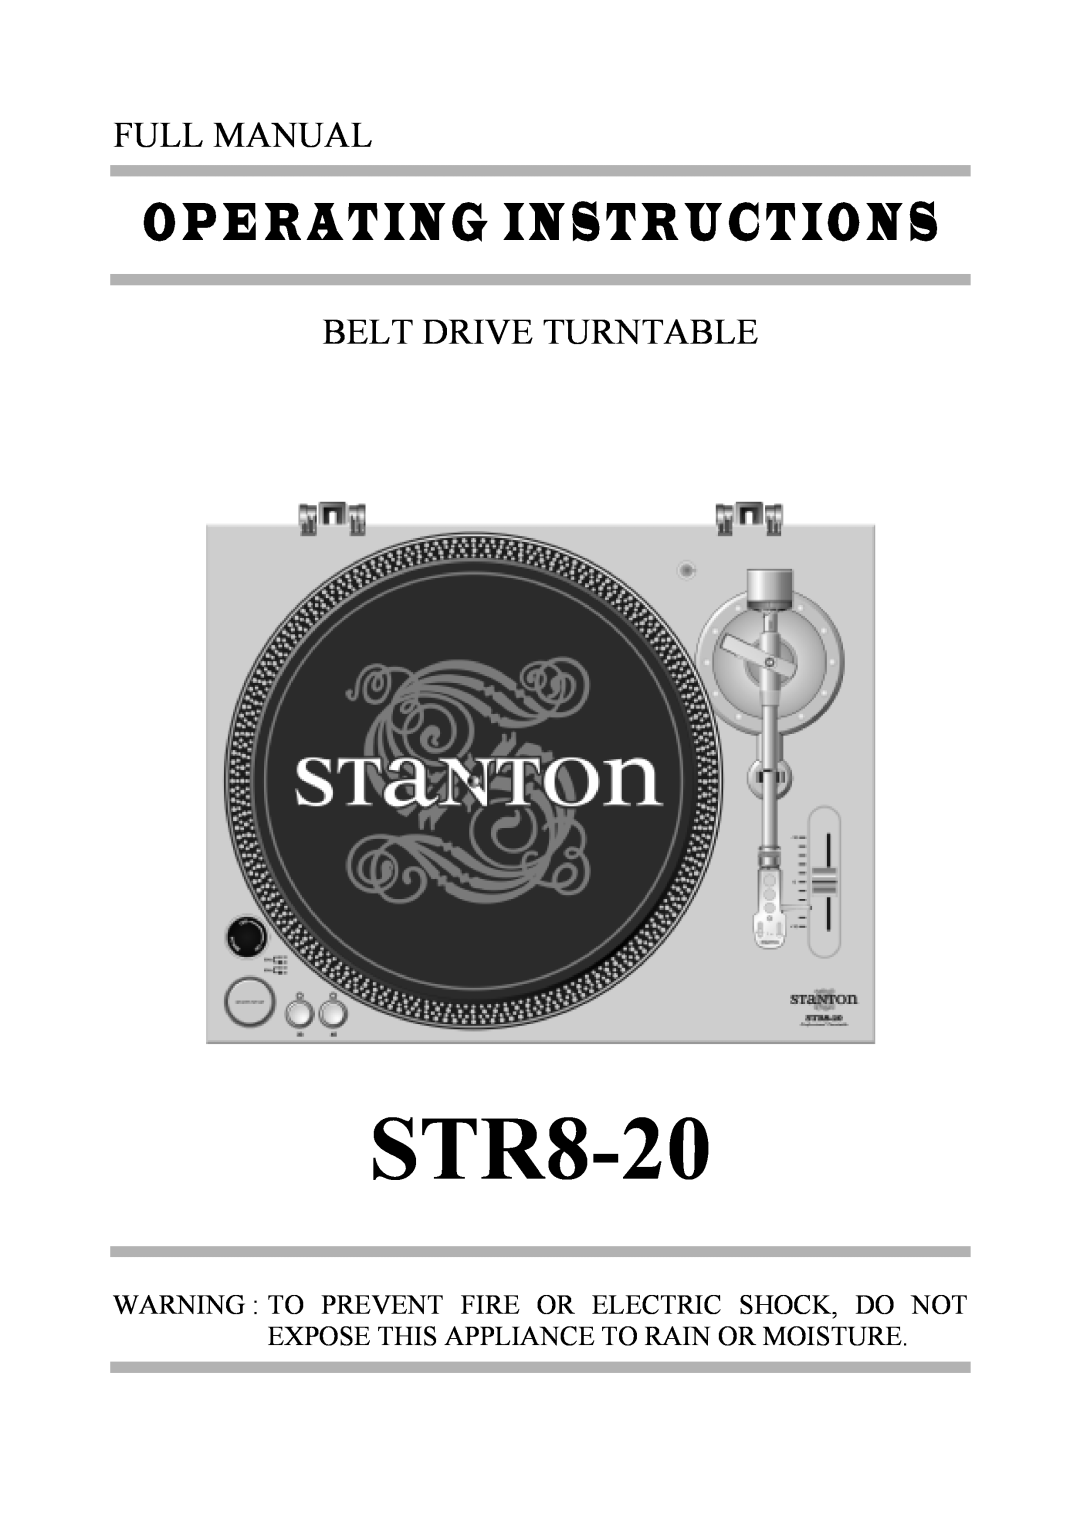 Stanton STR8-20 manual Full Manual Belt Drive Turntable 